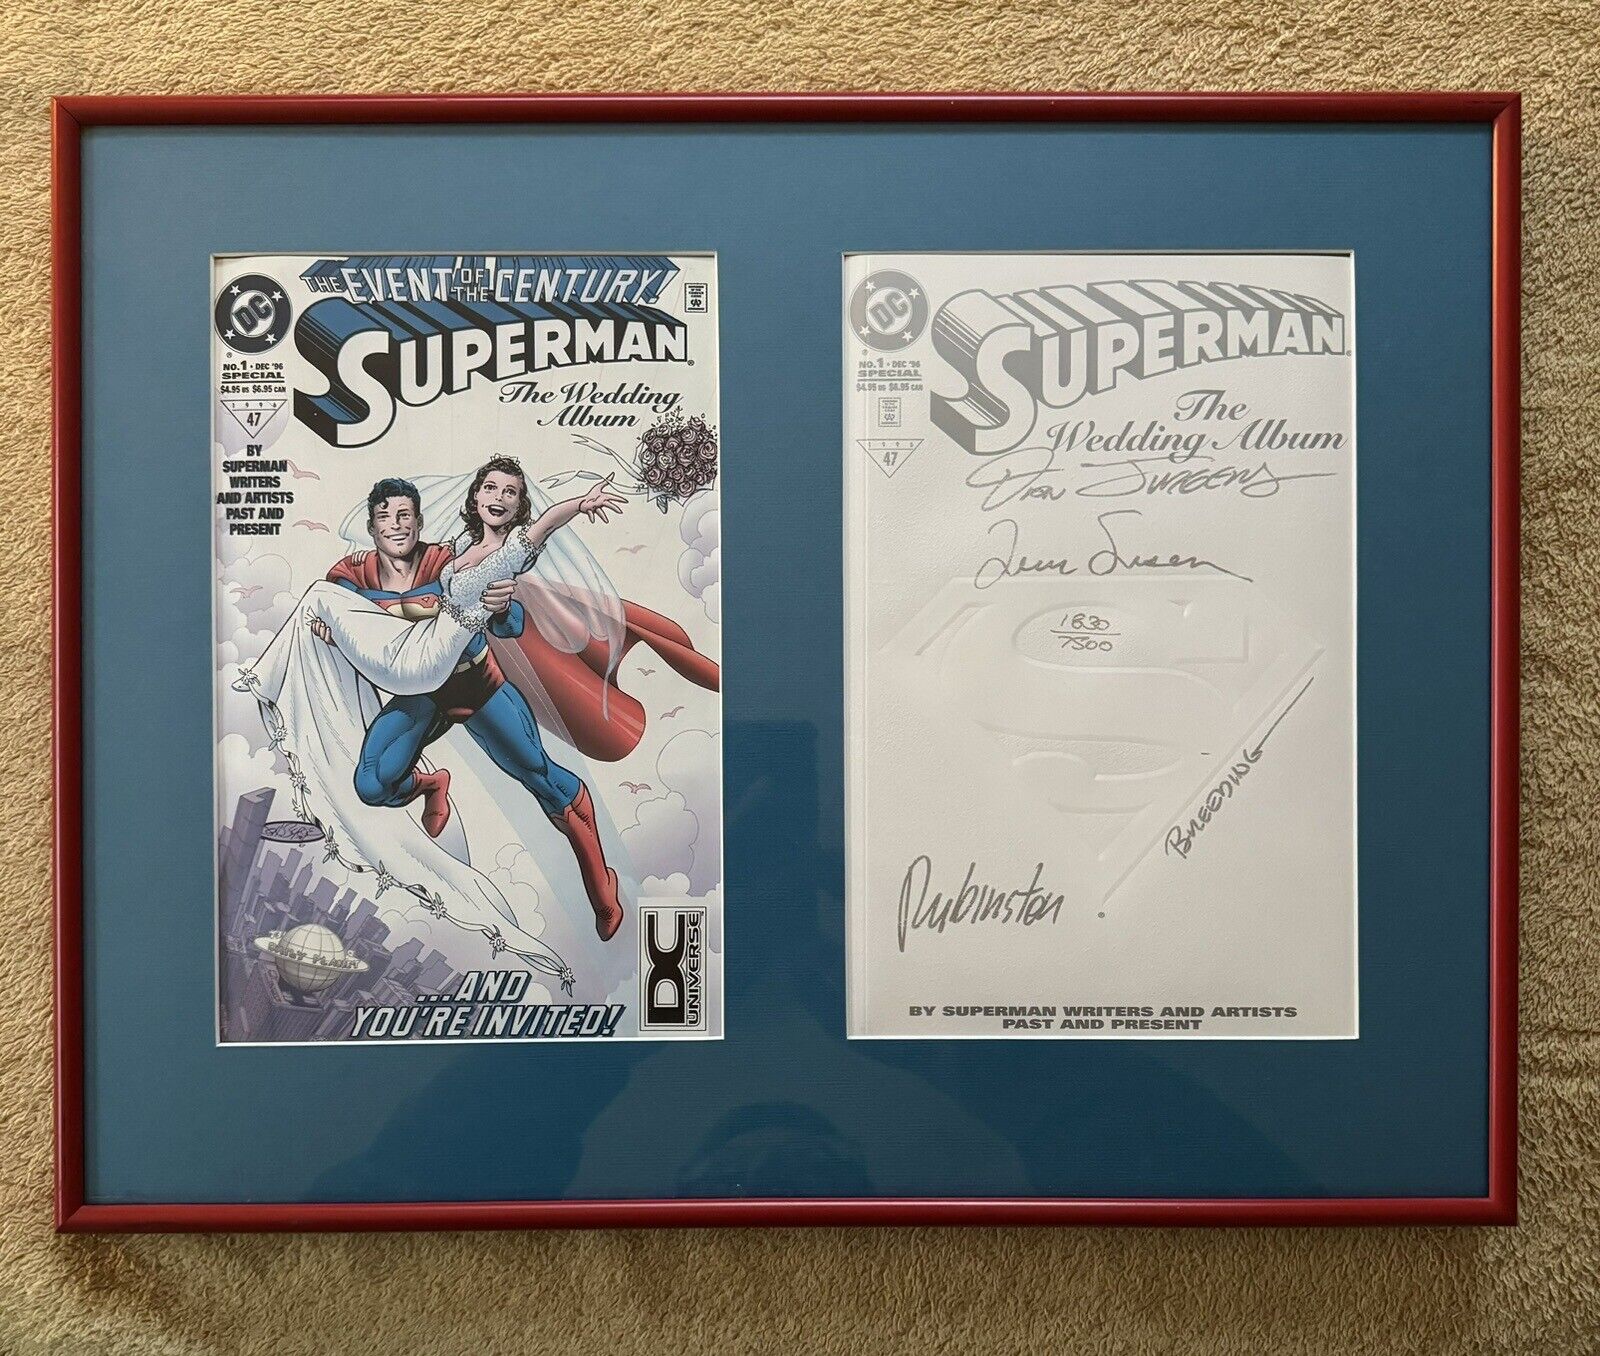 Superman#47-The Wedding Cvr A&B Signed& Custom Framed Never Opened Or Read